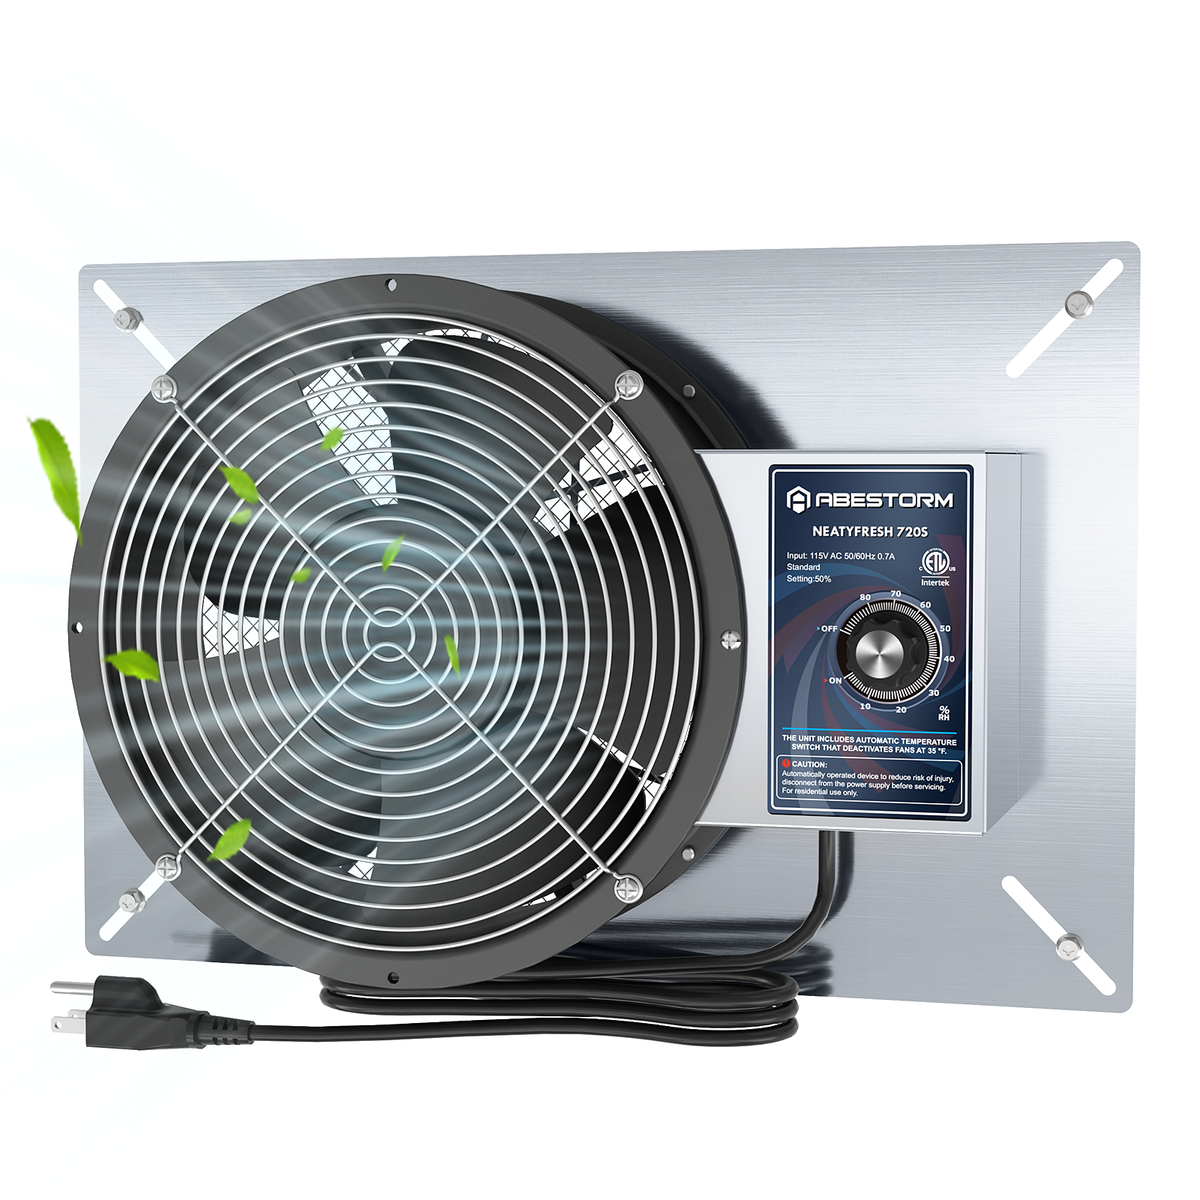 Abestorm 720CFM Crawlspace Ventilator Fan | NeatyFresh 720S